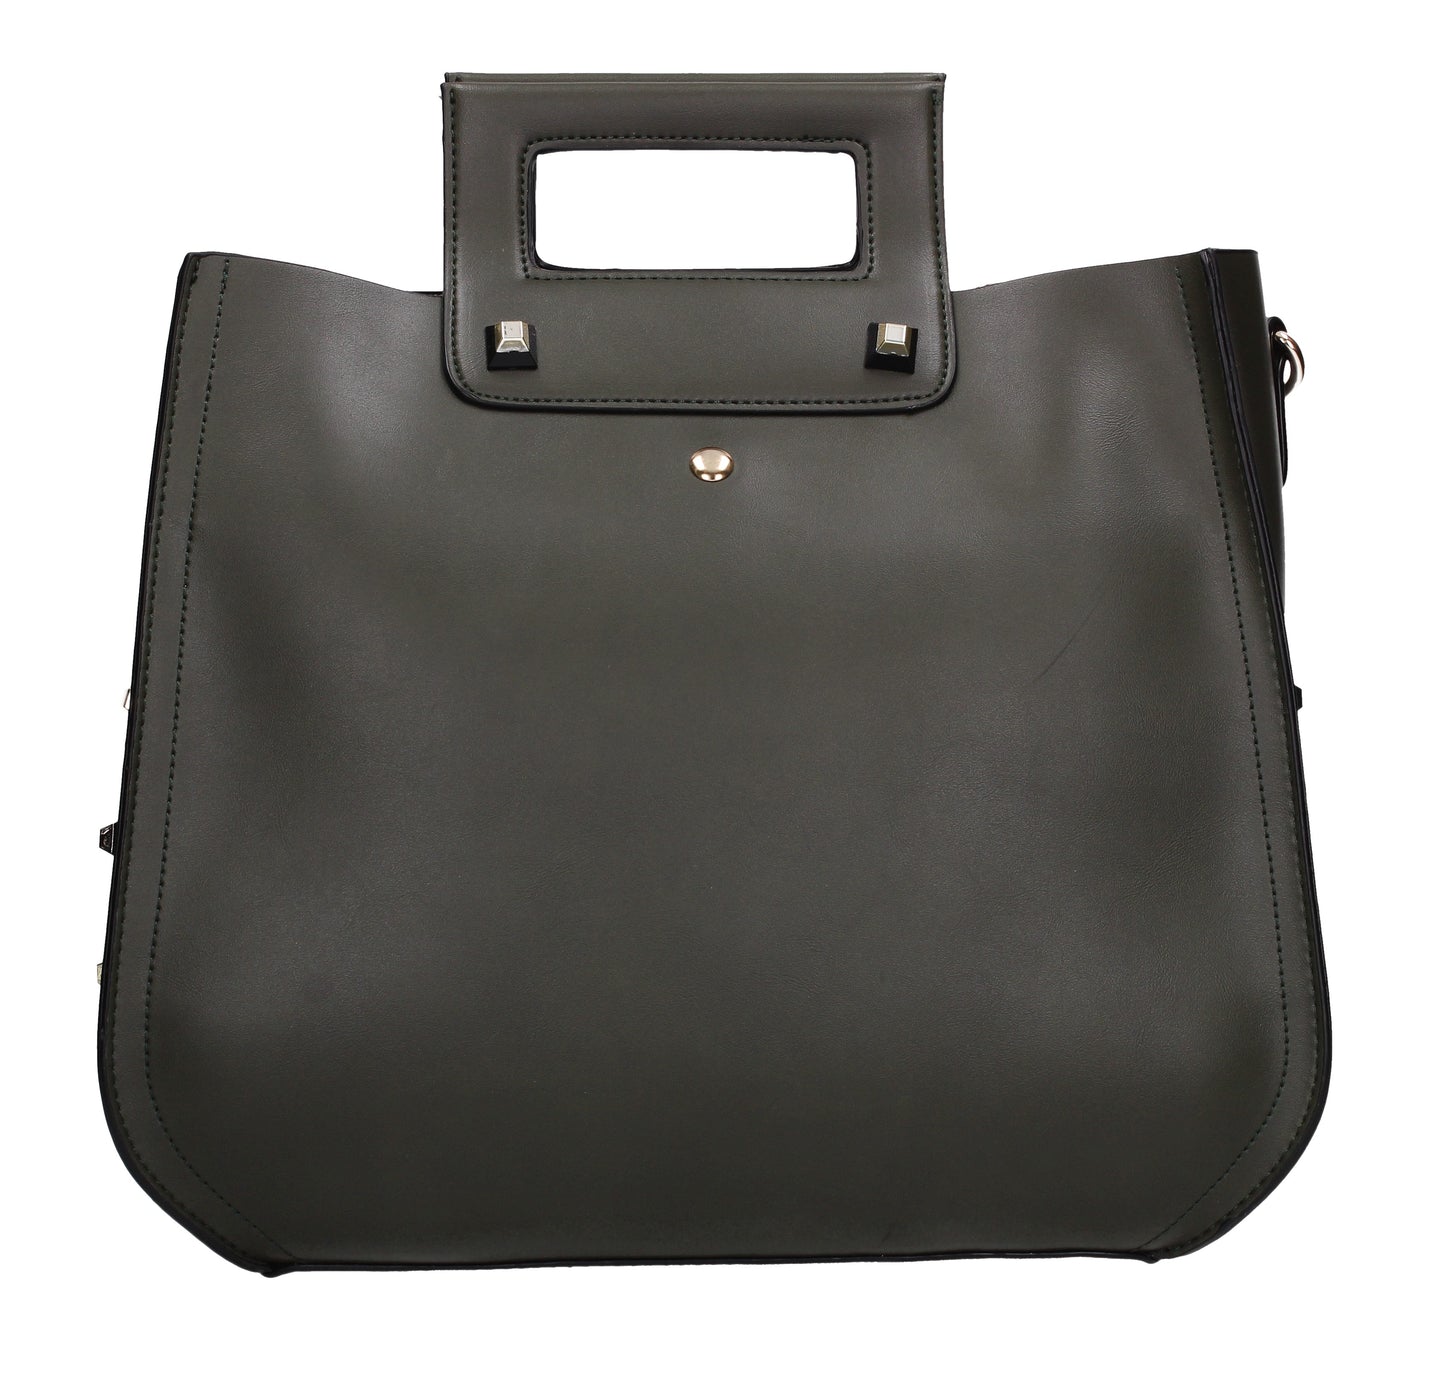 Buy your Angela Handbag Khaki Today! Buy with confidence from Swankyswans